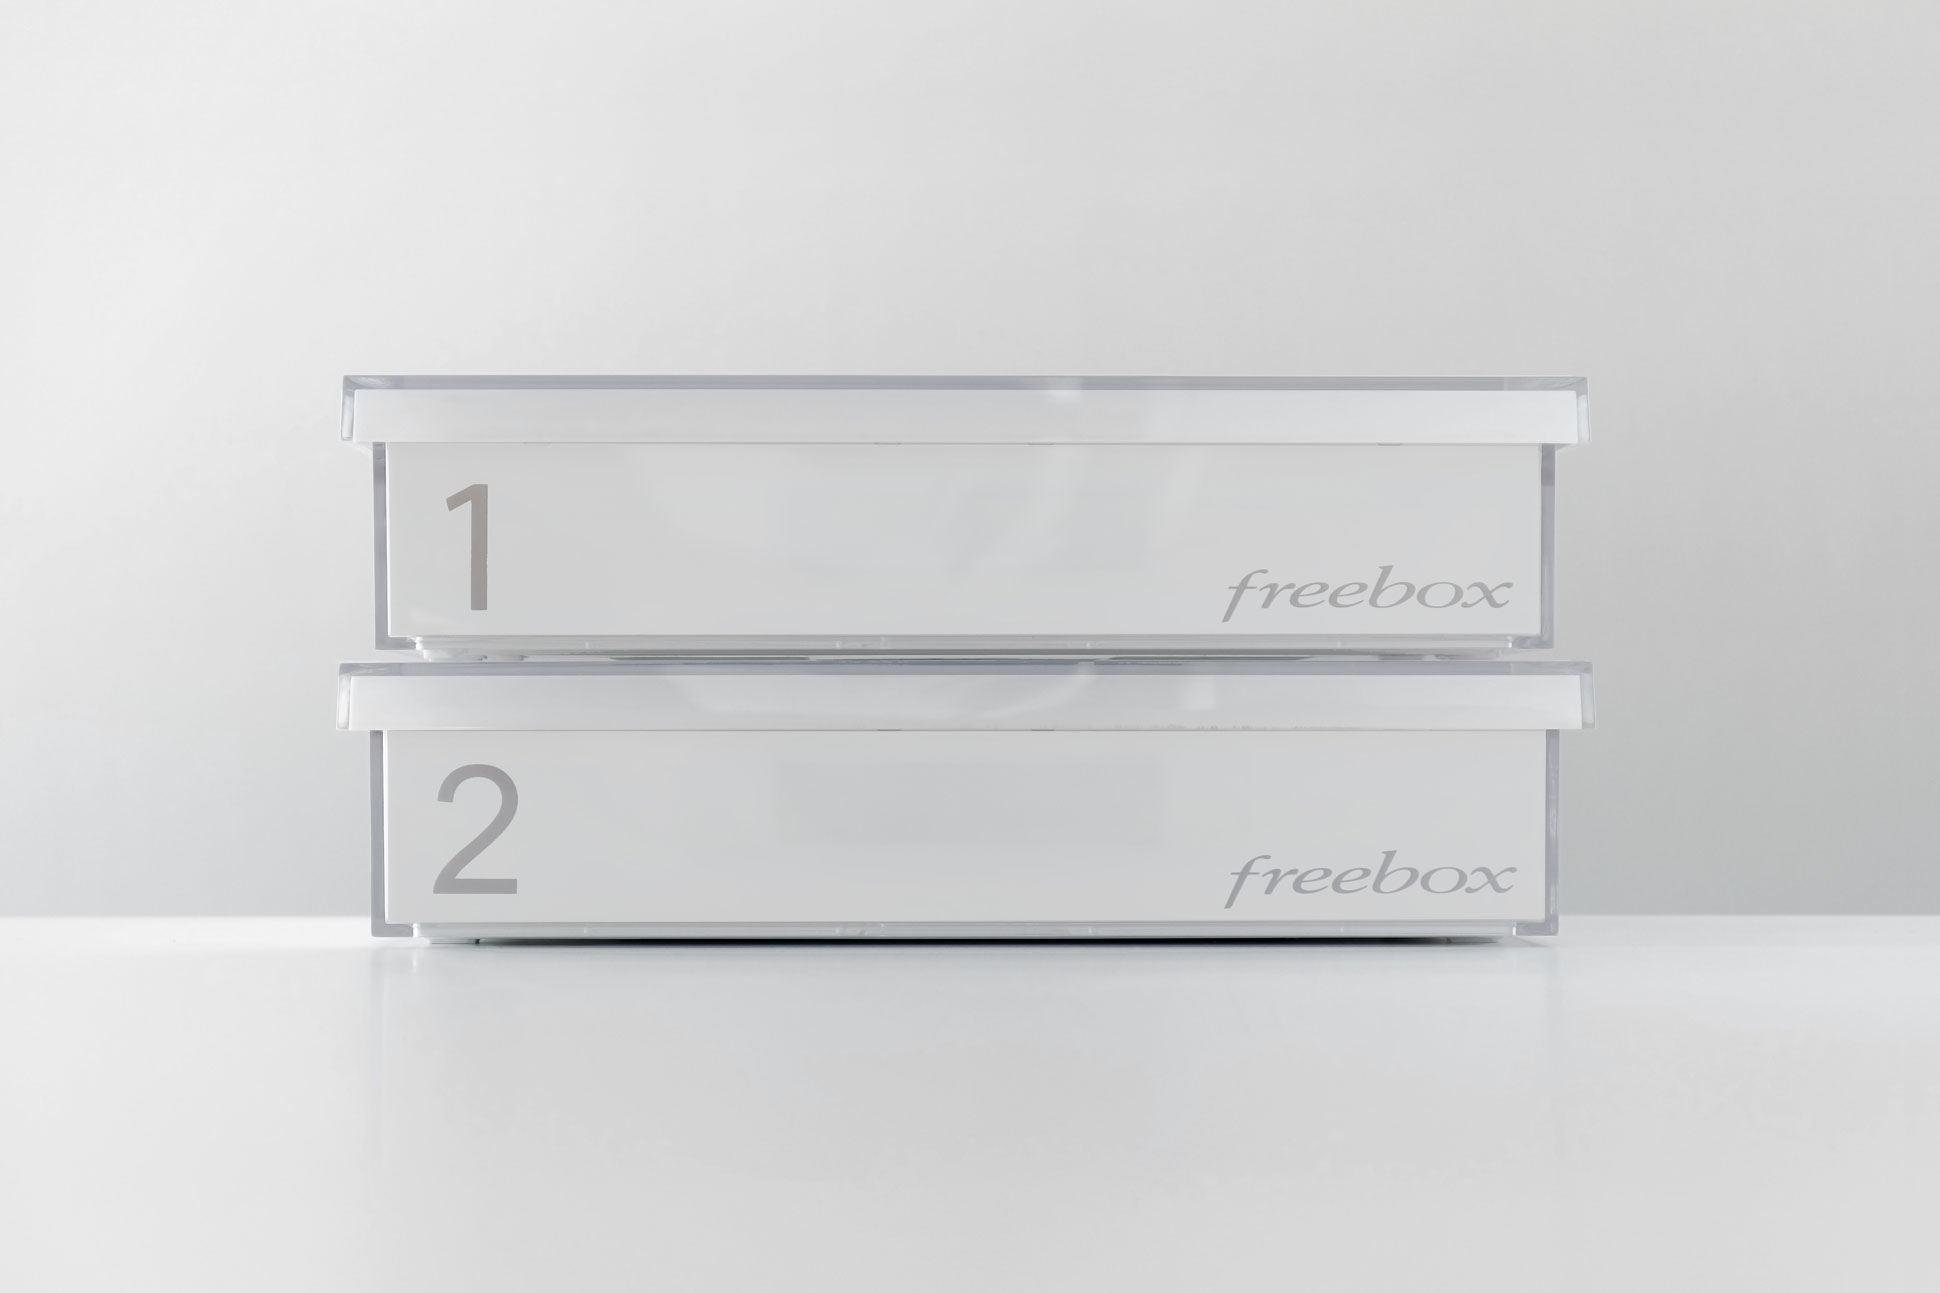 La Vente Privée de la Freebox Crystal de Free est prolongée